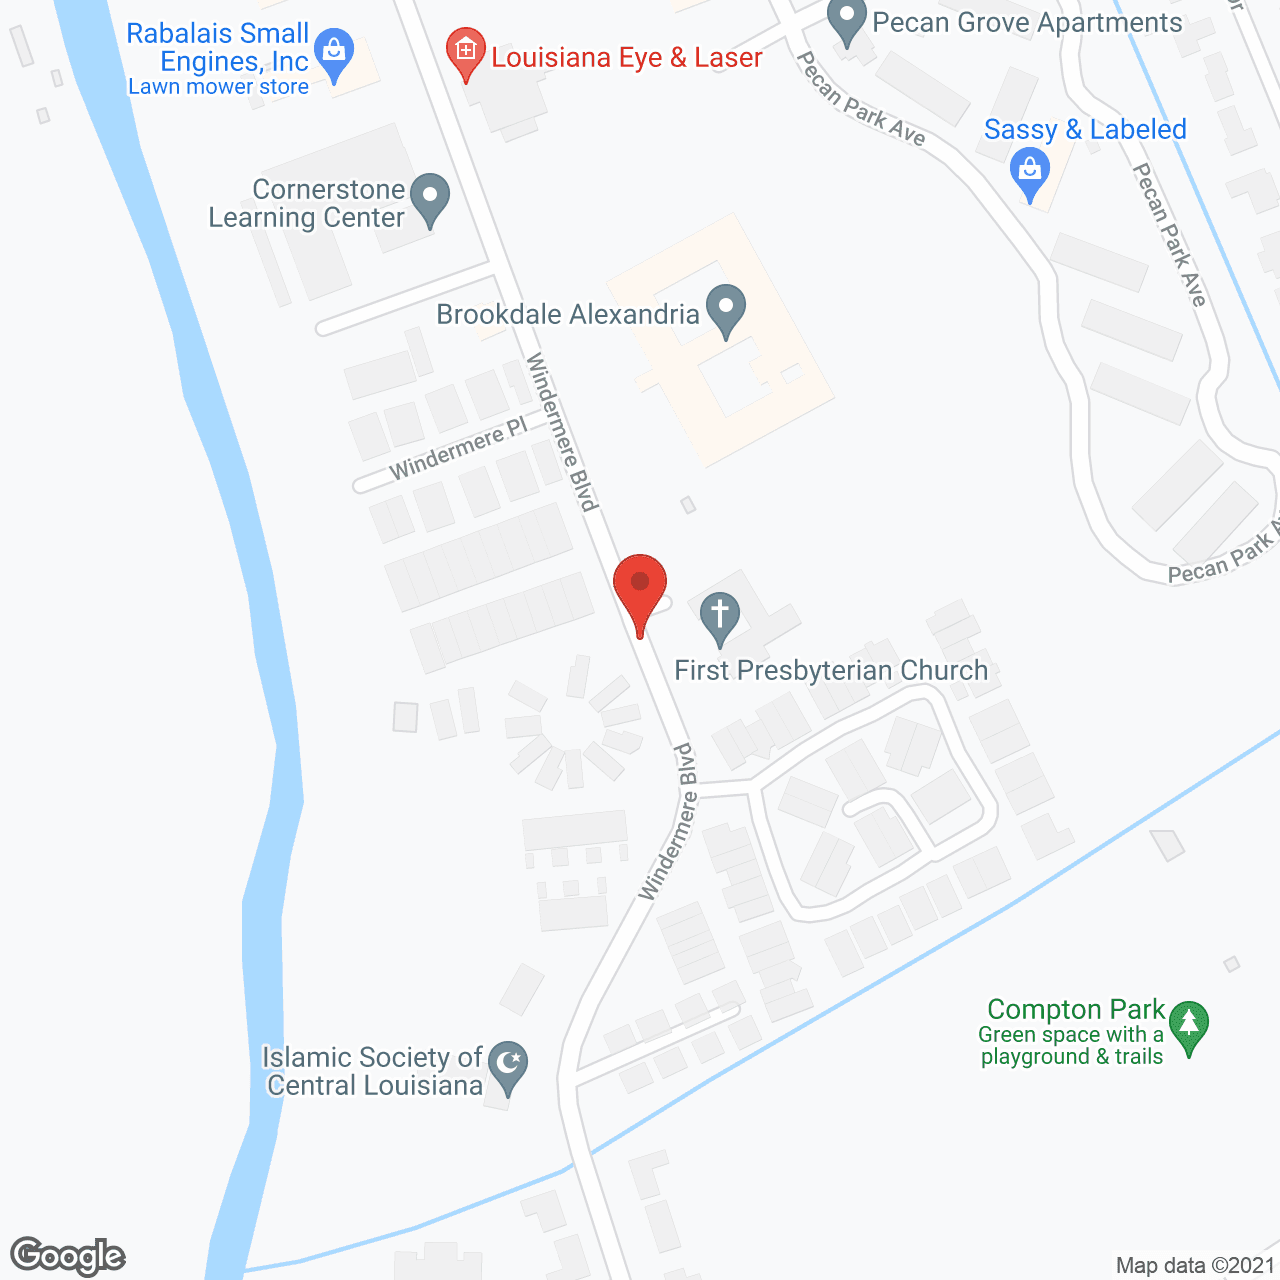 Brookdale Alexandria in google map